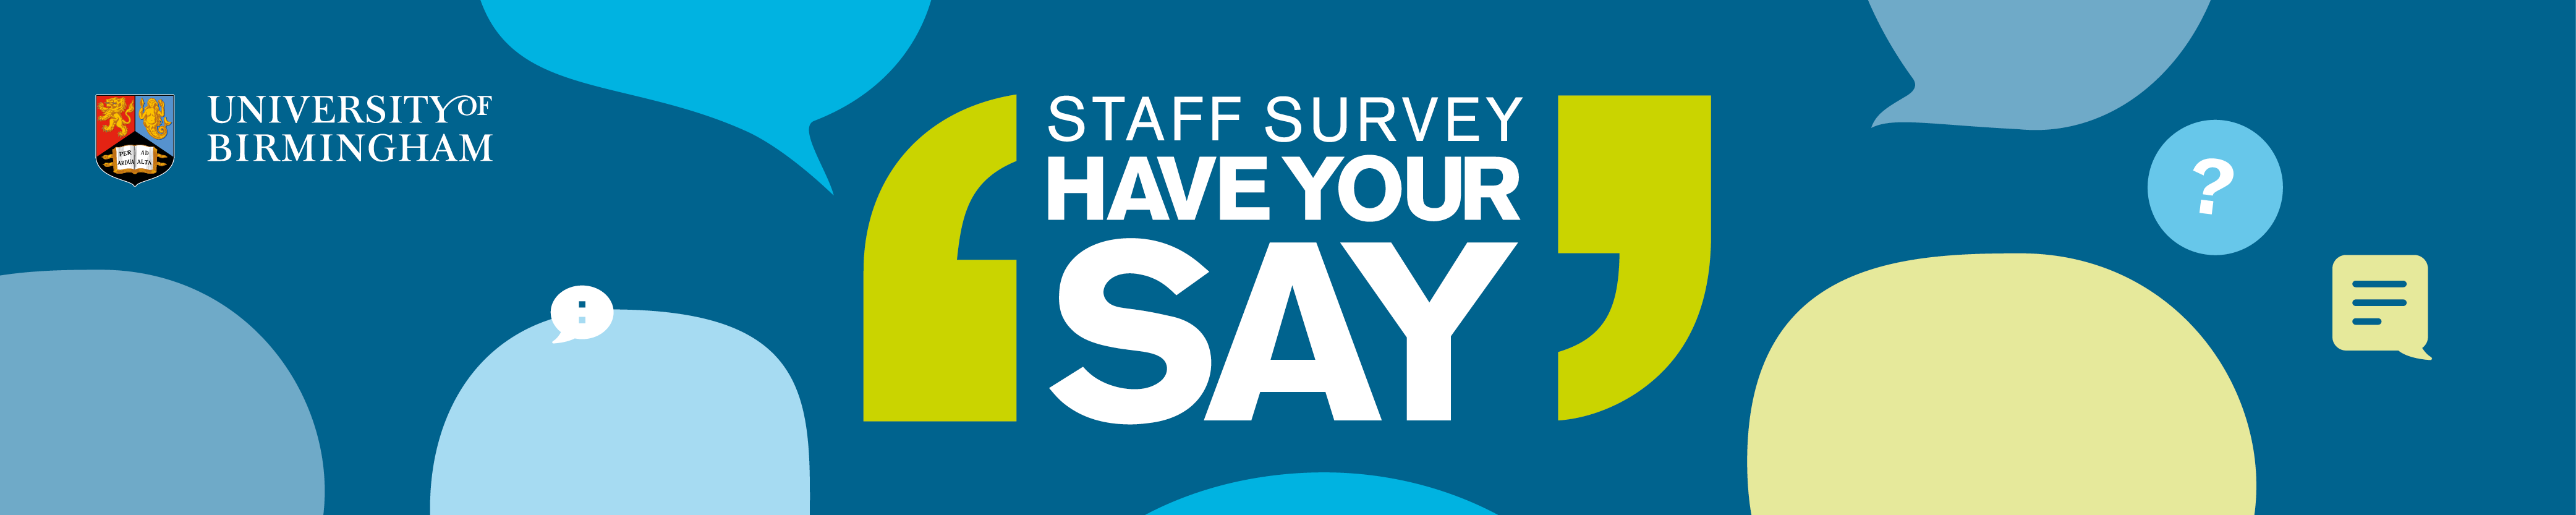 20269 UoB Staff Survey Banner Final Files